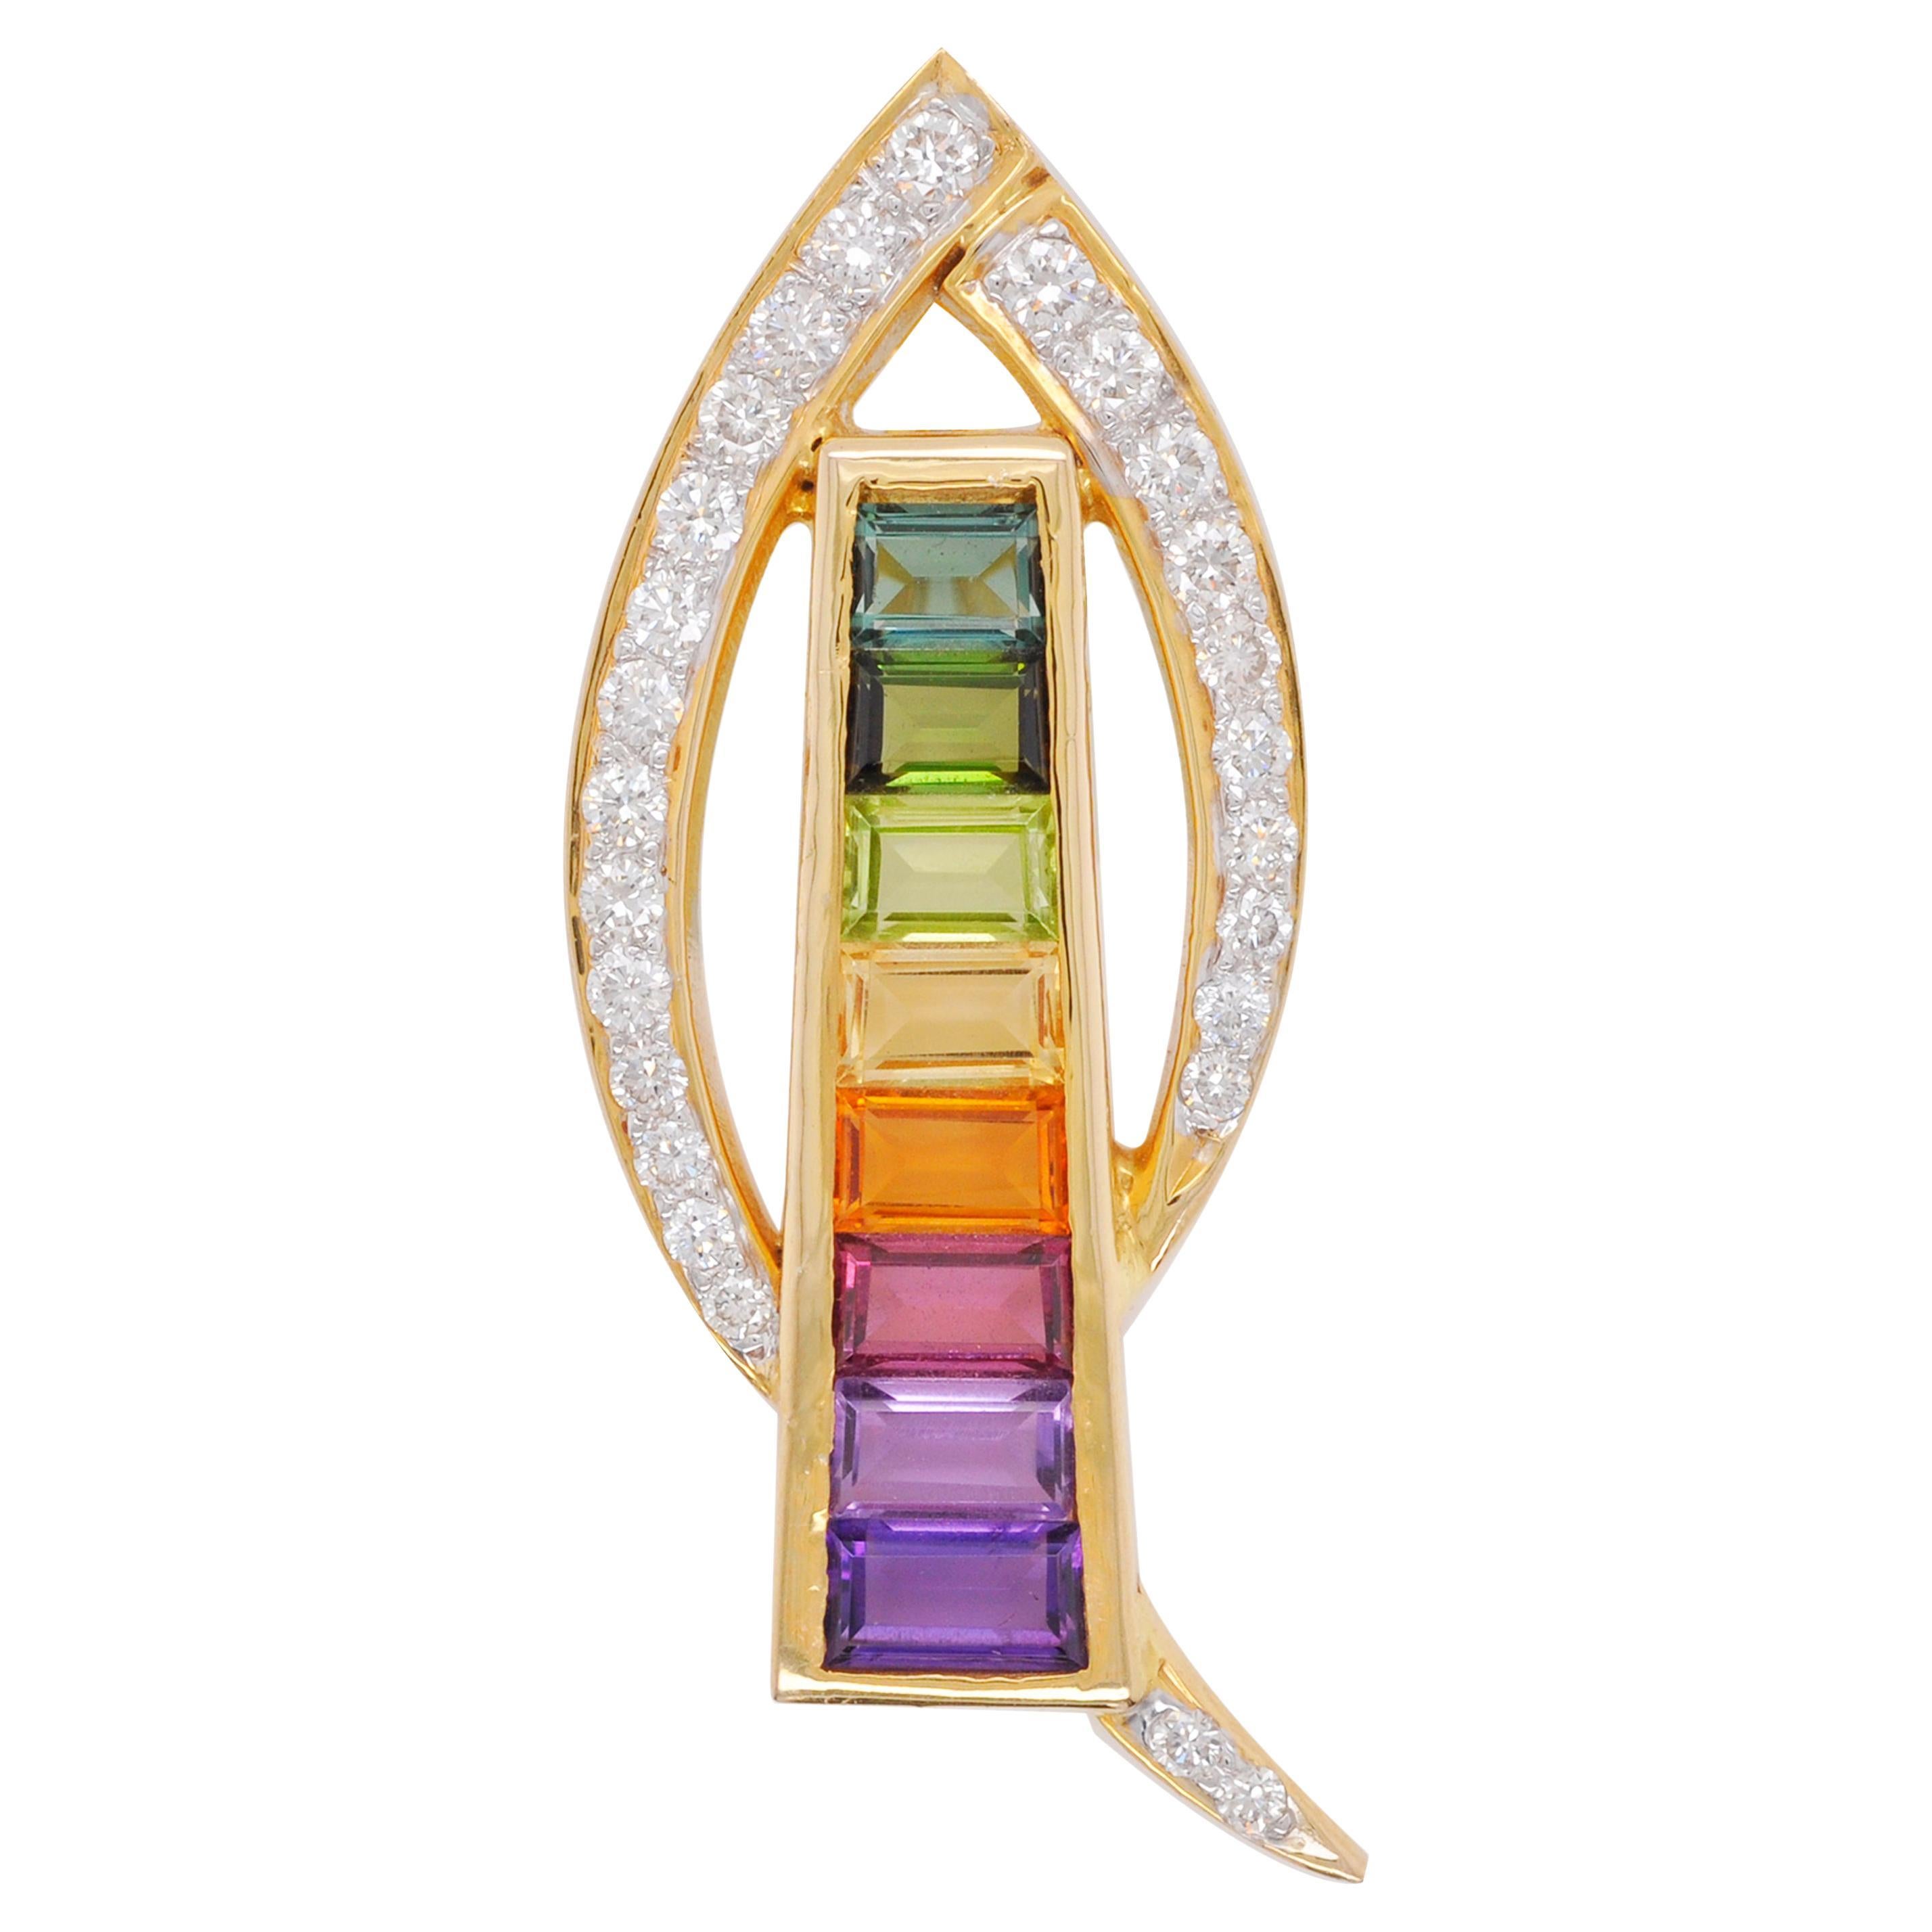 Collier pendentif contemporain en or 18 carats avec diamants et pierres précieuses multicolores en forme d'arc-en-ciel